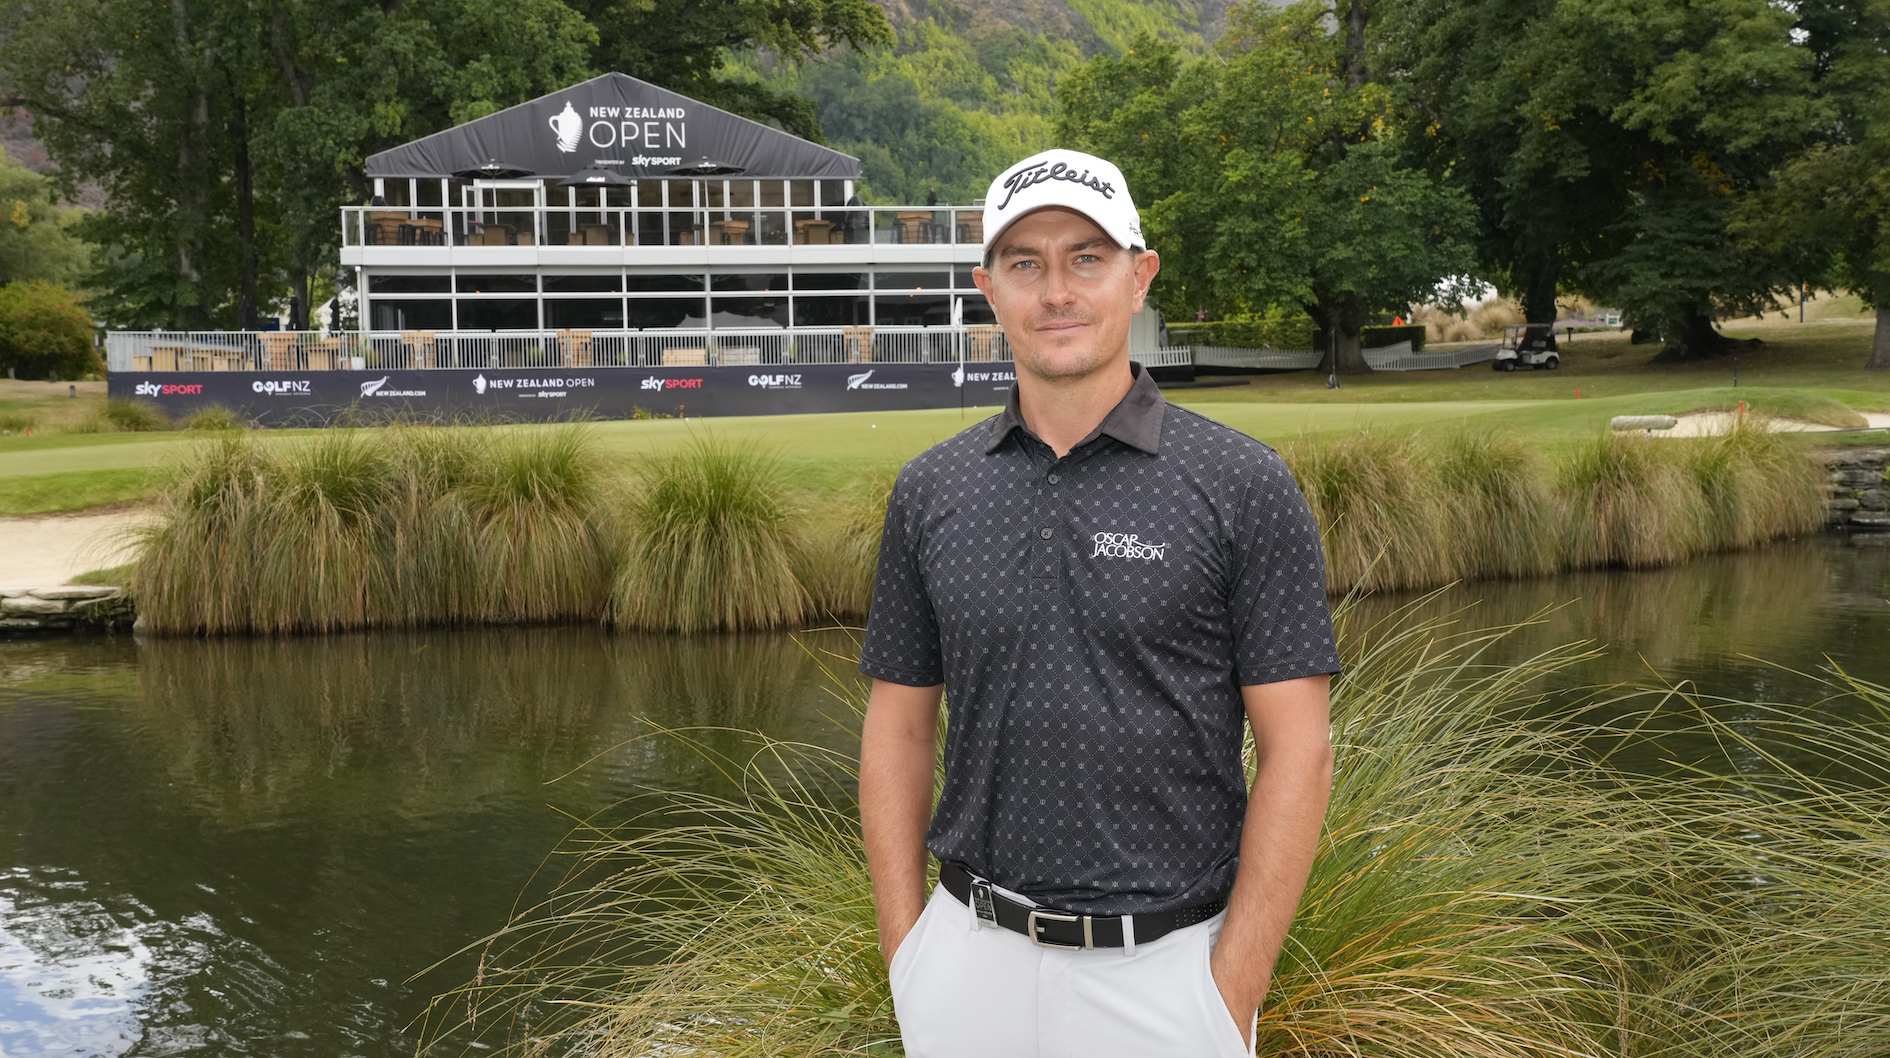 European Tour winner to play in New Zealand Open - PGA of Australia